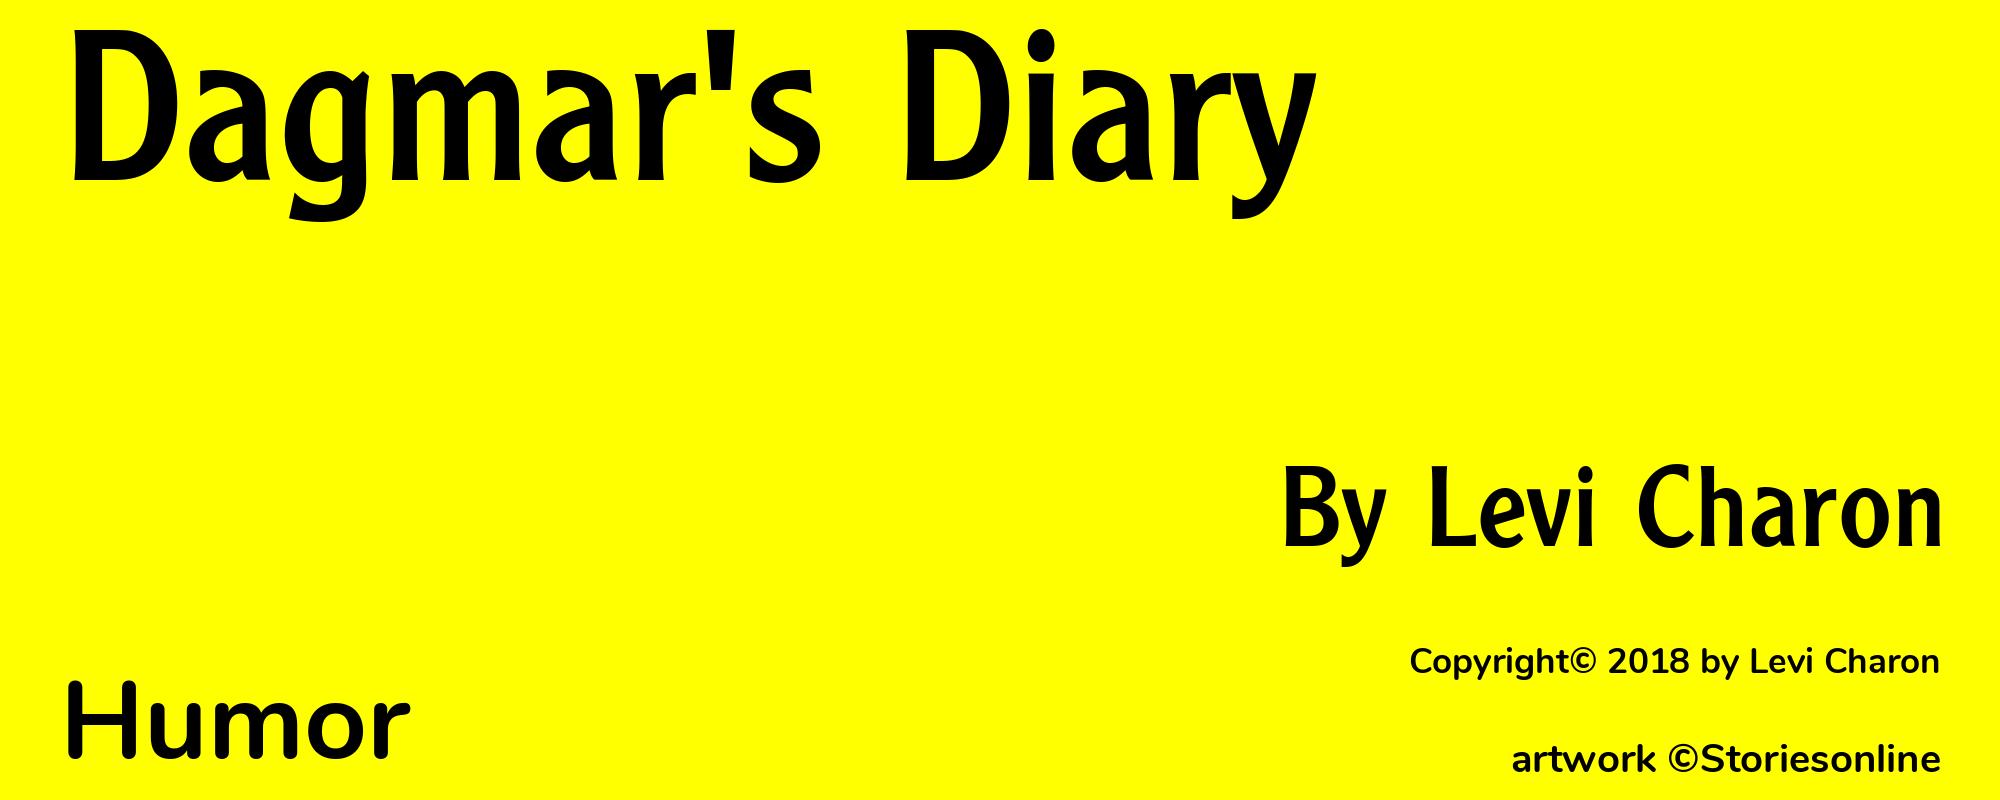 Dagmar's Diary - Cover